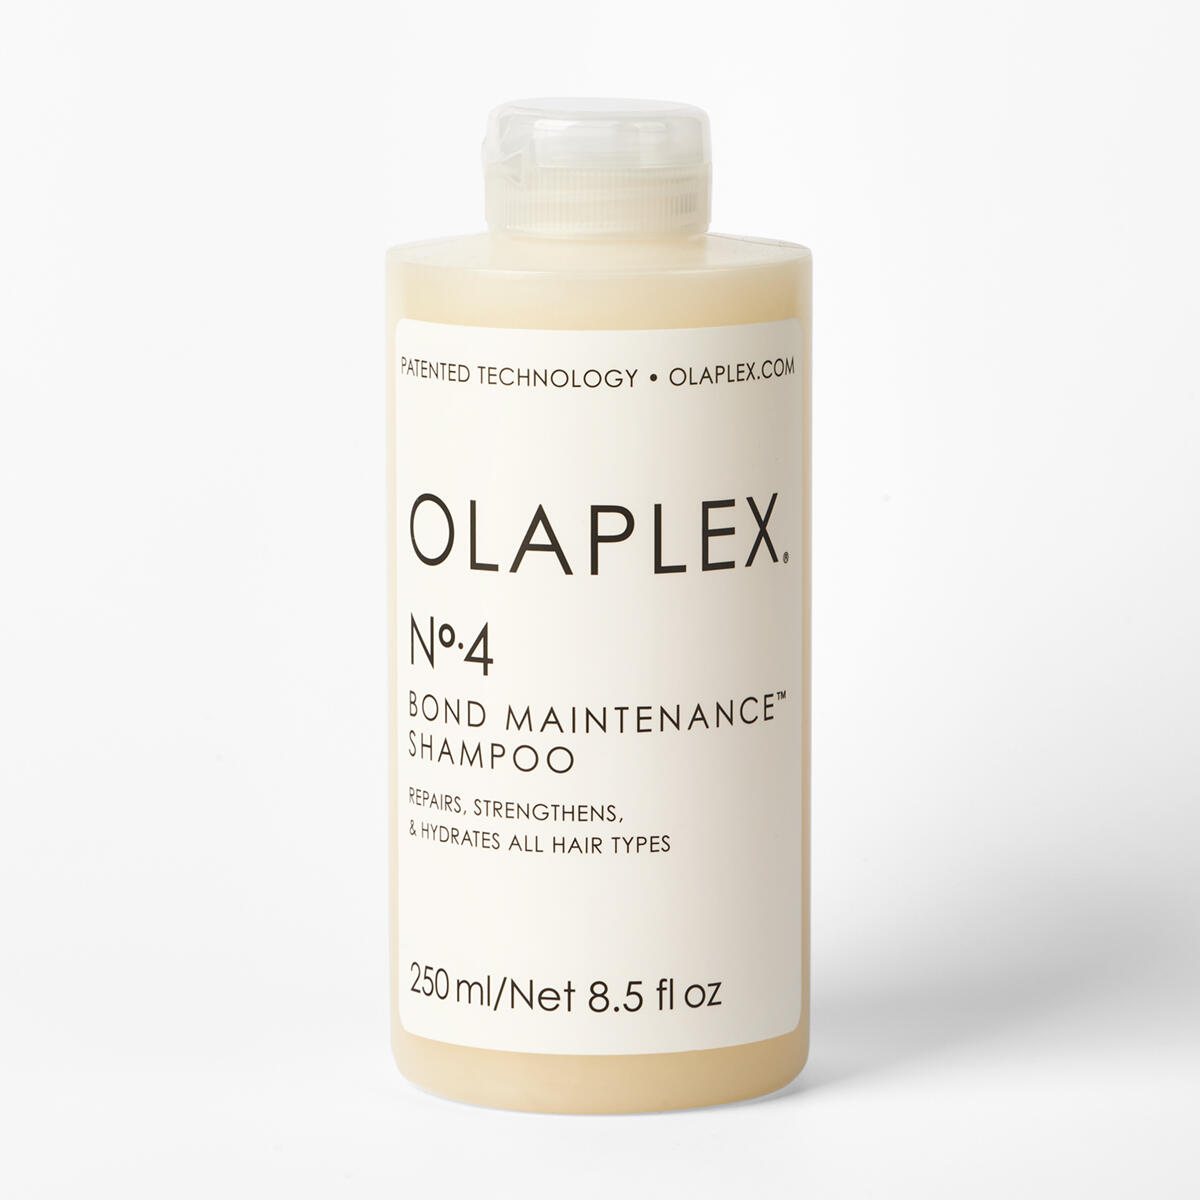 Olaplex Bond Maintenance Shampoo No. 4 null